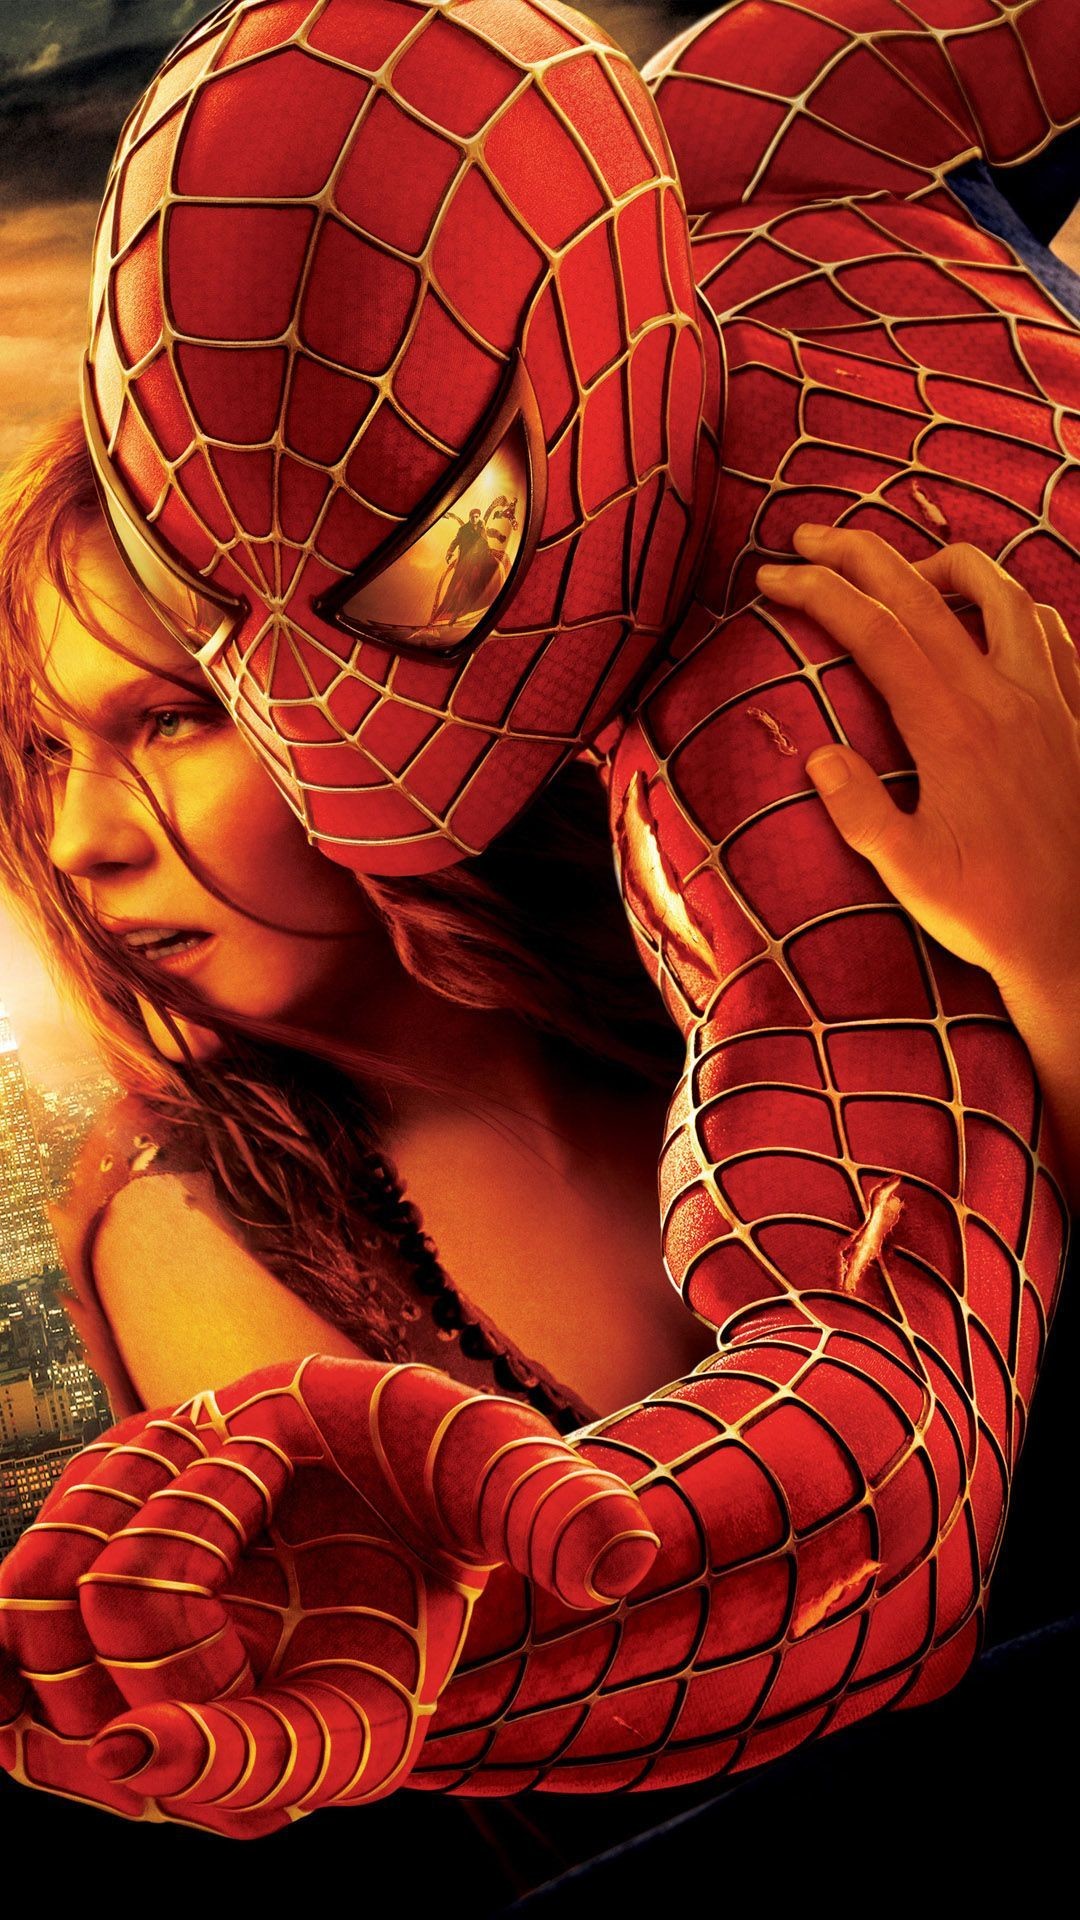 spiderman wallpaper hd 1080p,spider man,superhero,fictional character,muscle,flesh